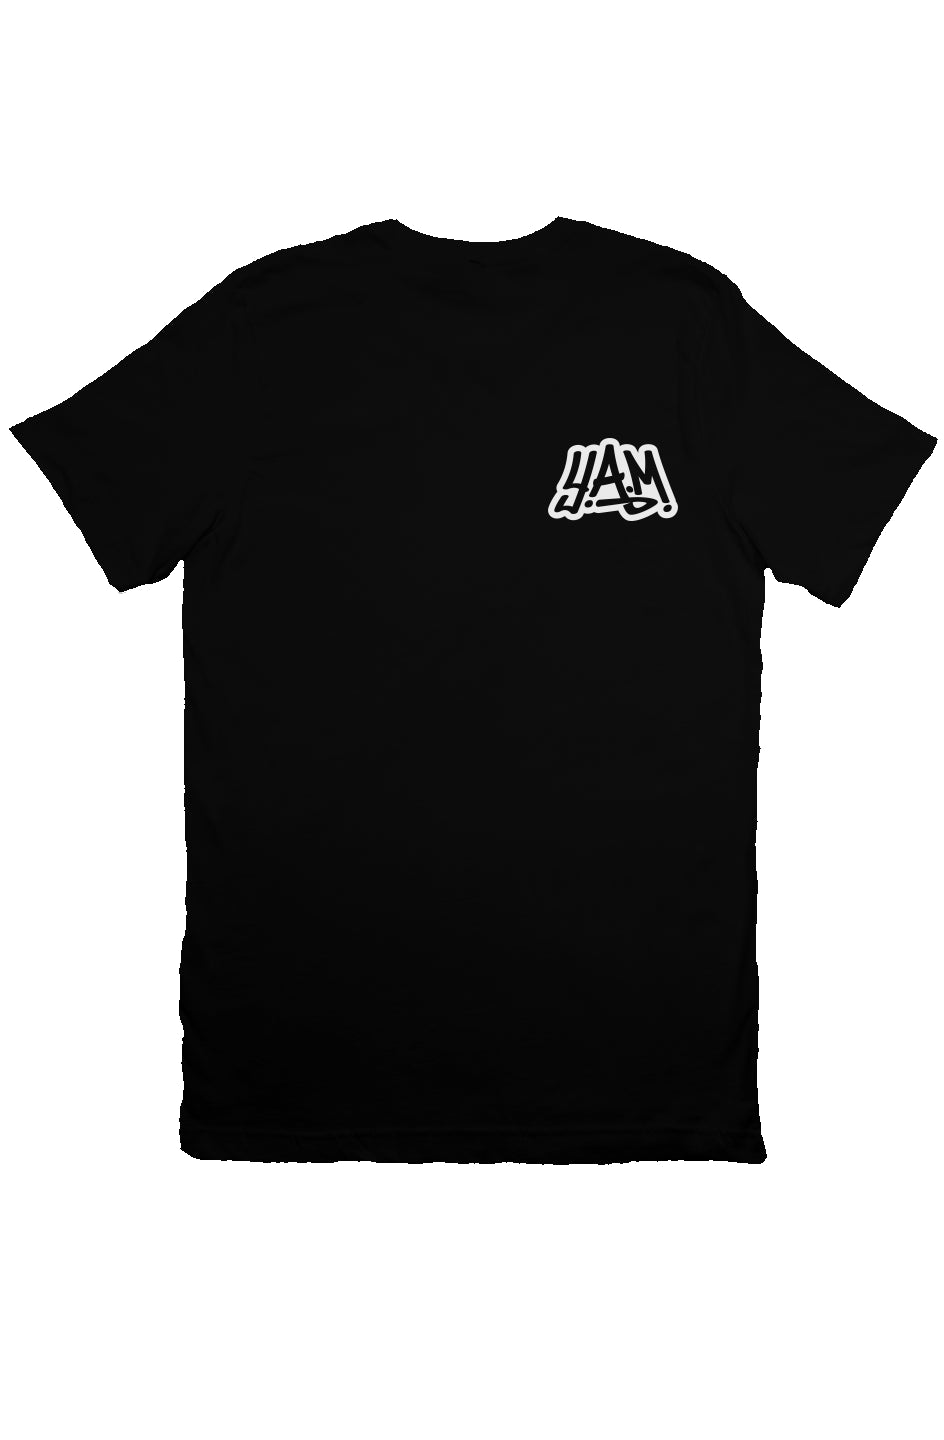 Unisex Black T-Shirt